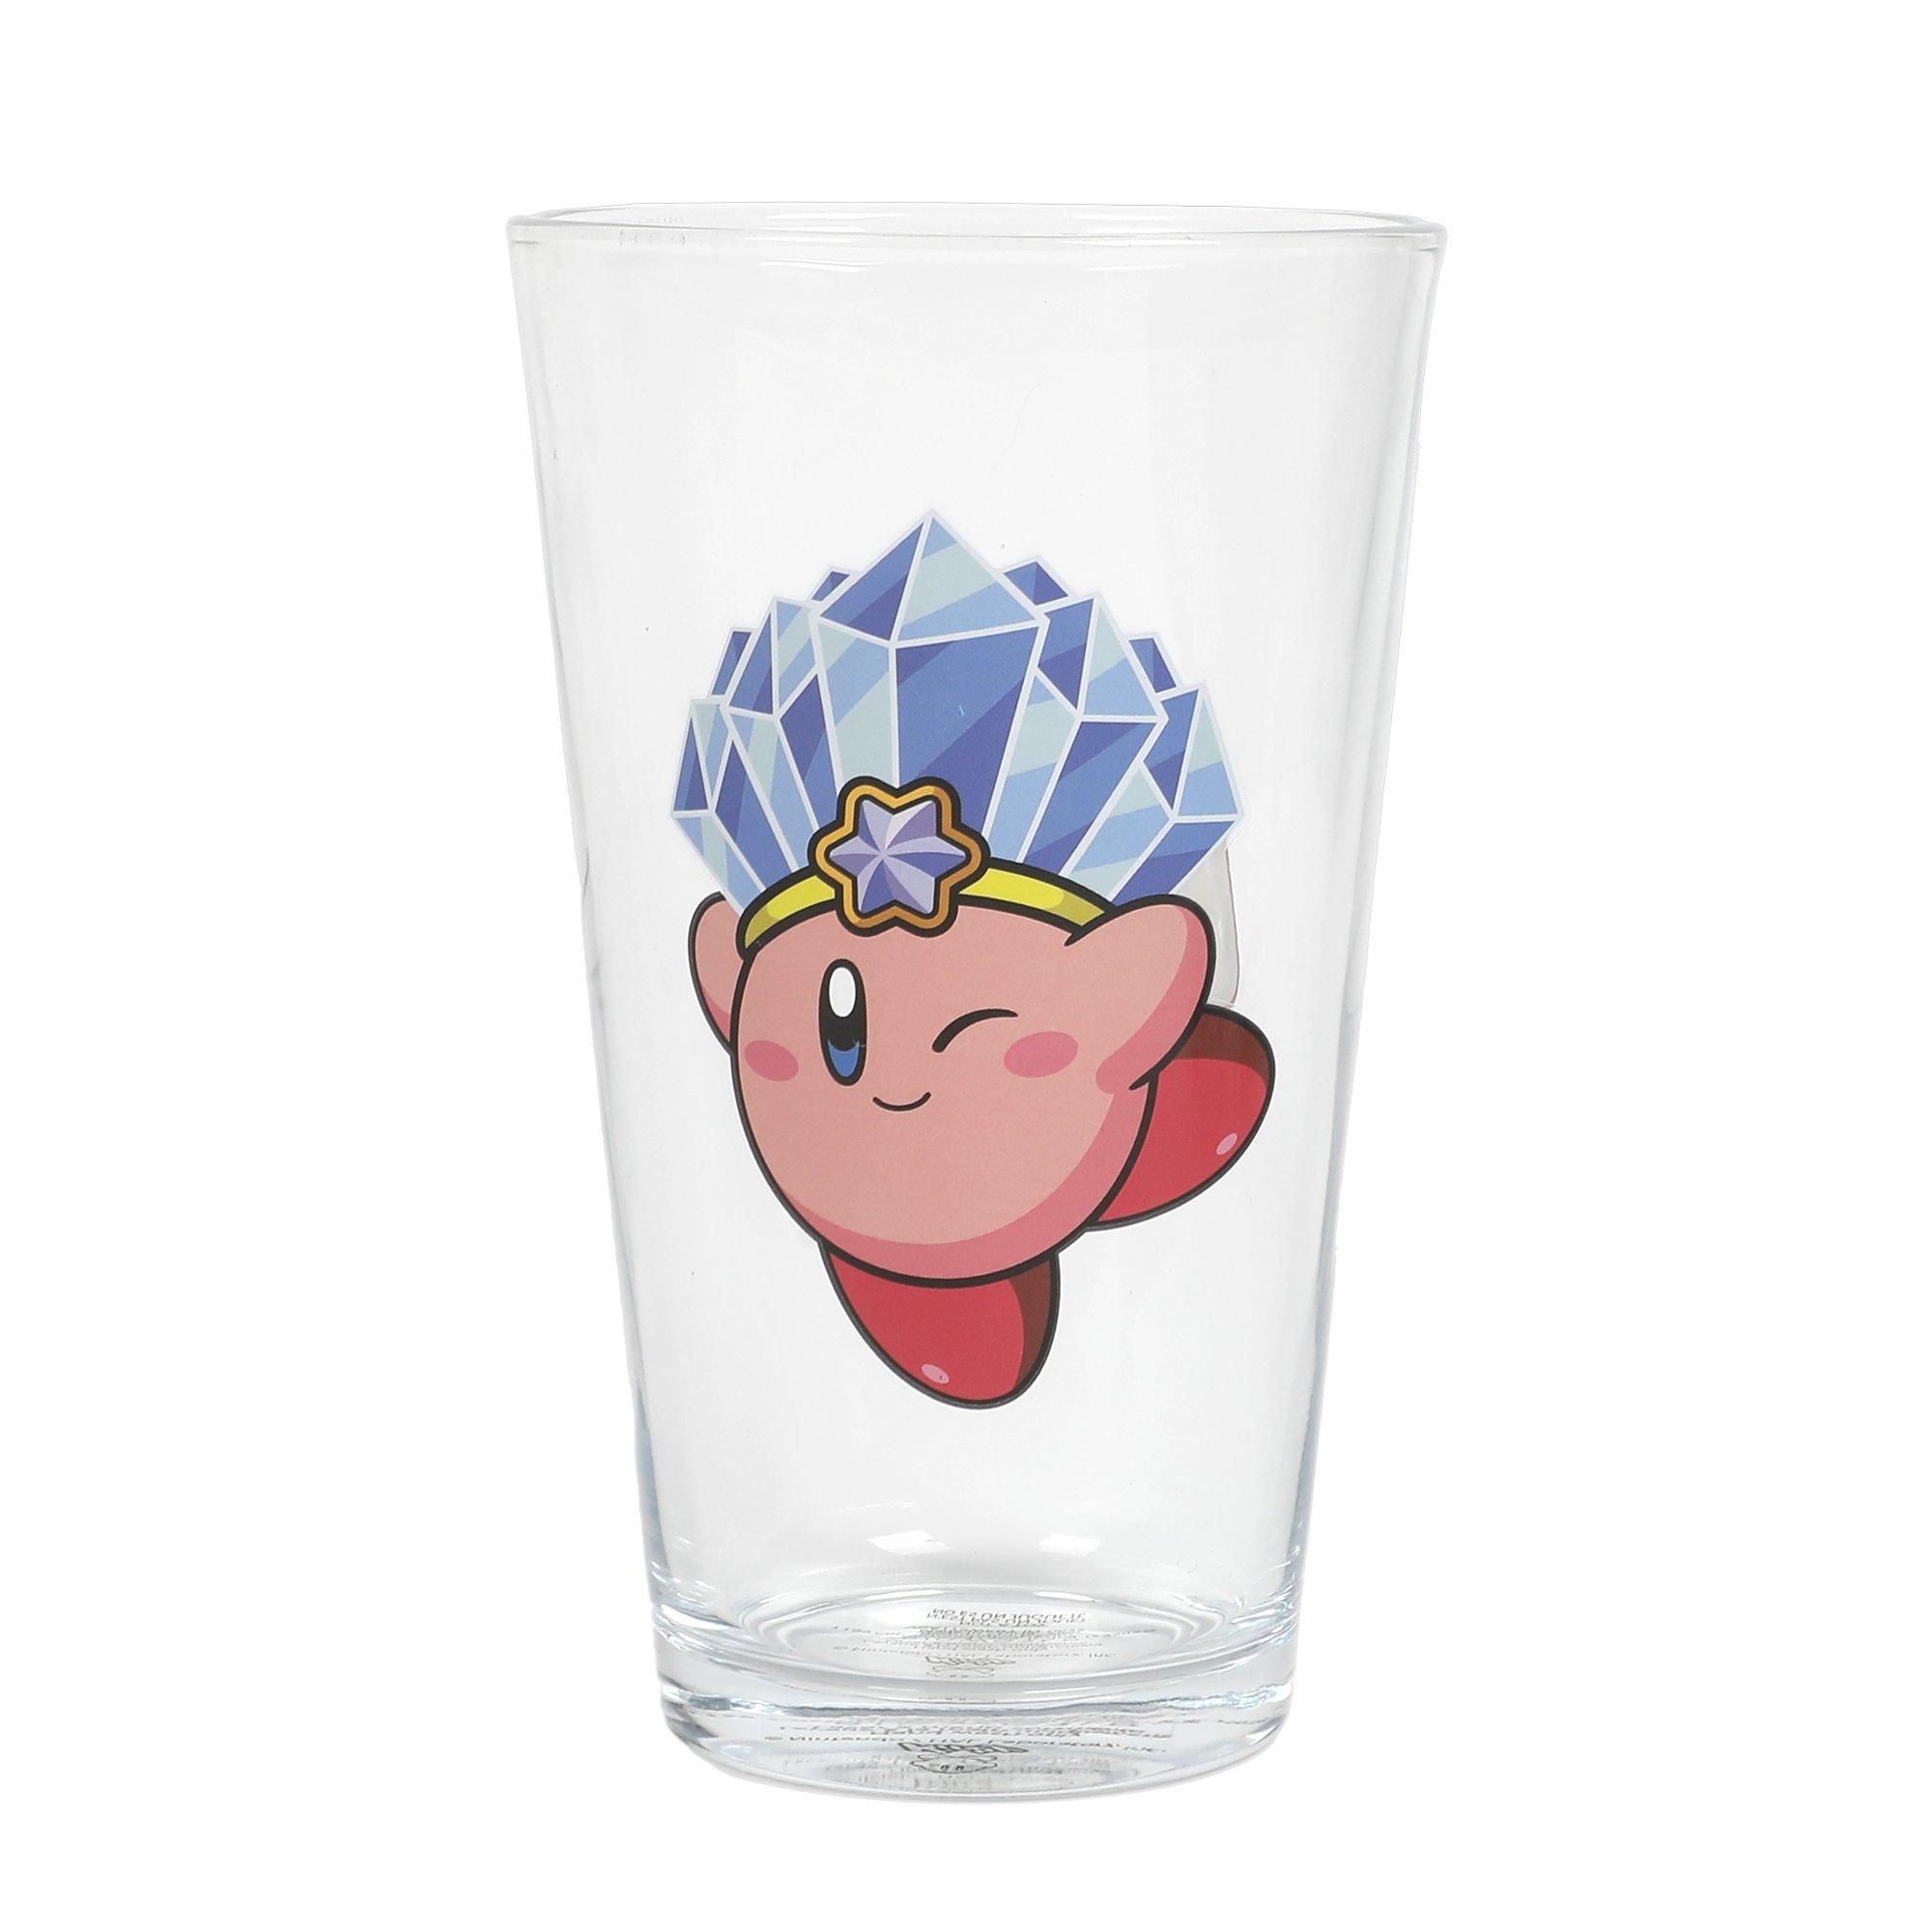 https://media.gamestop.com/i/gamestop/20004991_ALT04/Kirby-Abilities-16-oz-Glass-Set-4-Pack?$pdp$